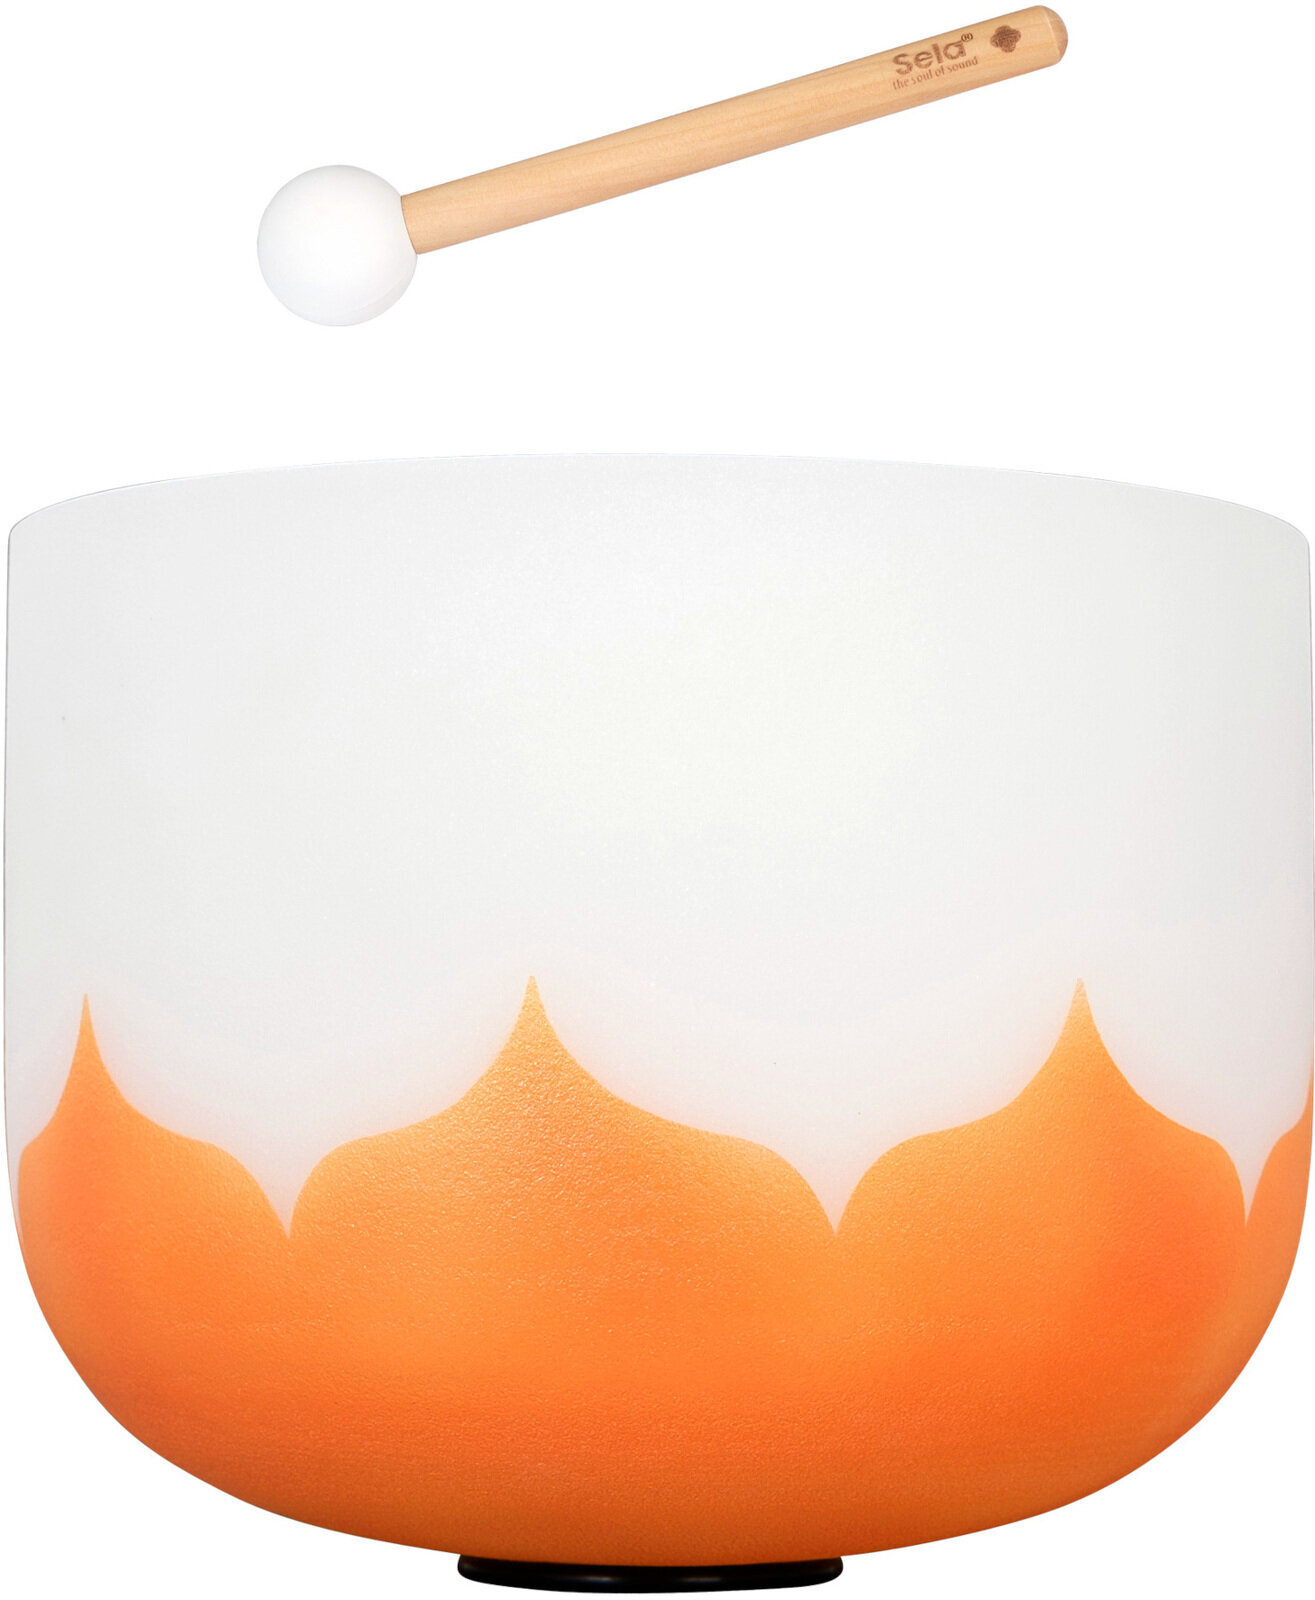 Perkusja dla terapii muzycznej Sela 10" Crystal Singing Bowl Lotus 440 Hz D - Orange (Sacral Chakra). incl. 1 Wood Mallet